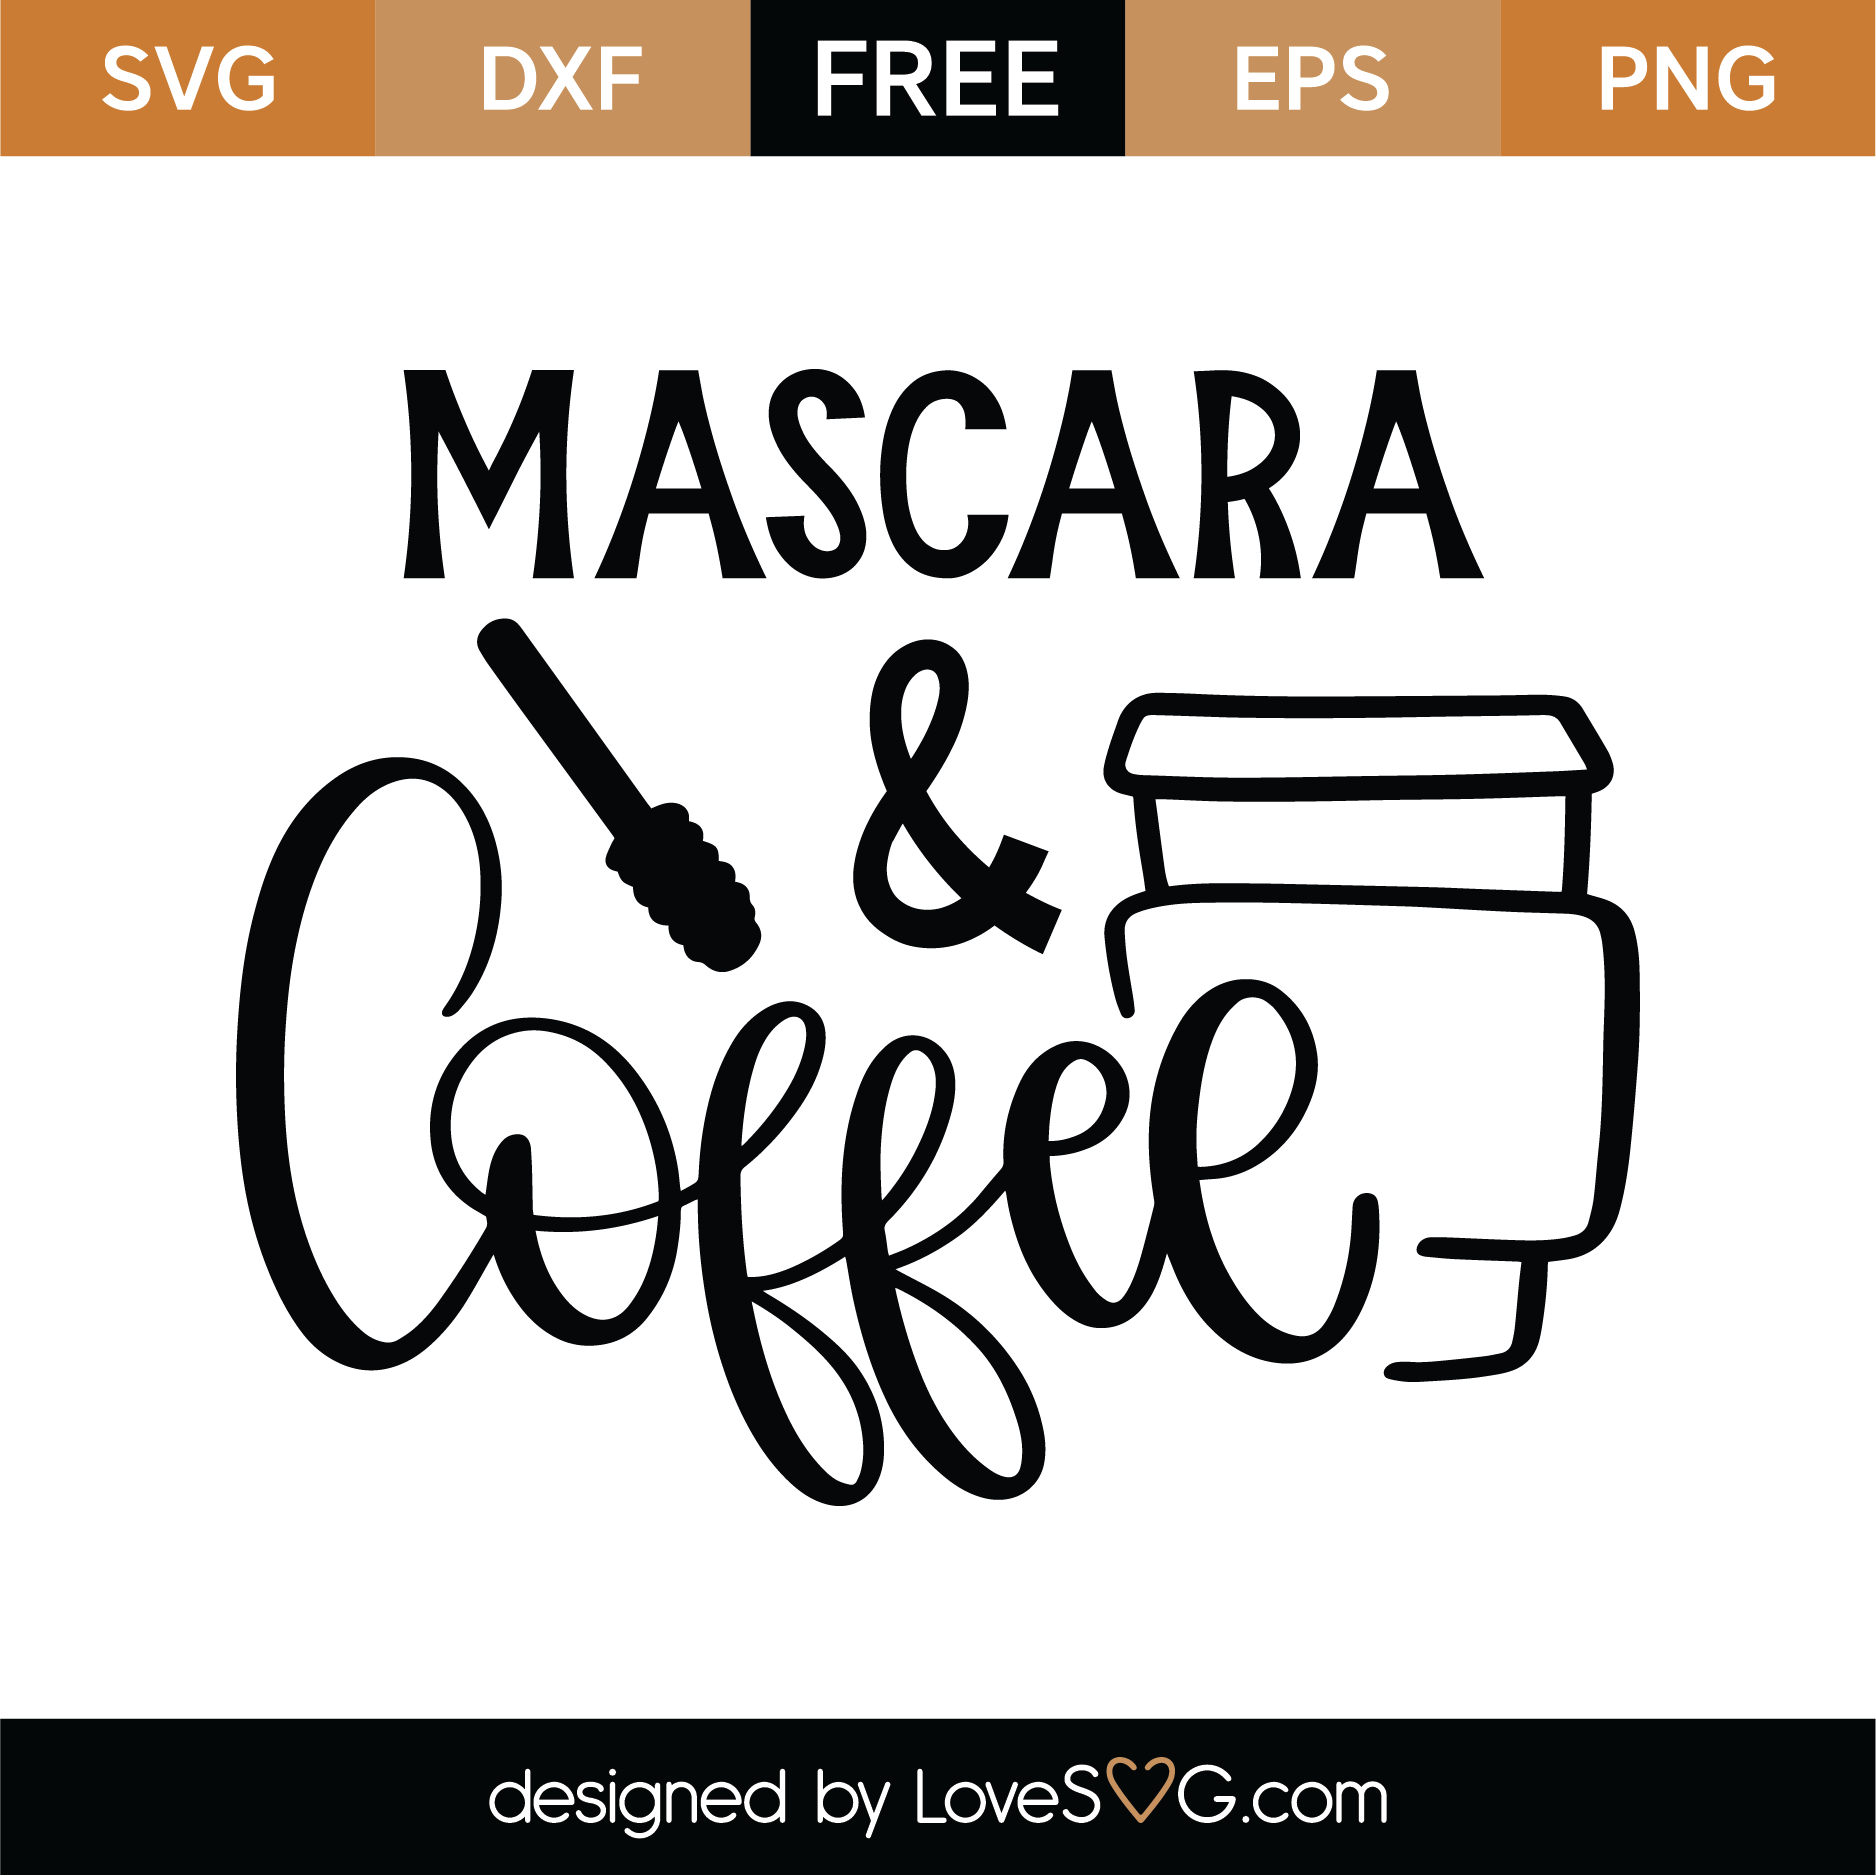 Download Free Mascara and Coffee SVG Cut File | Lovesvg.com